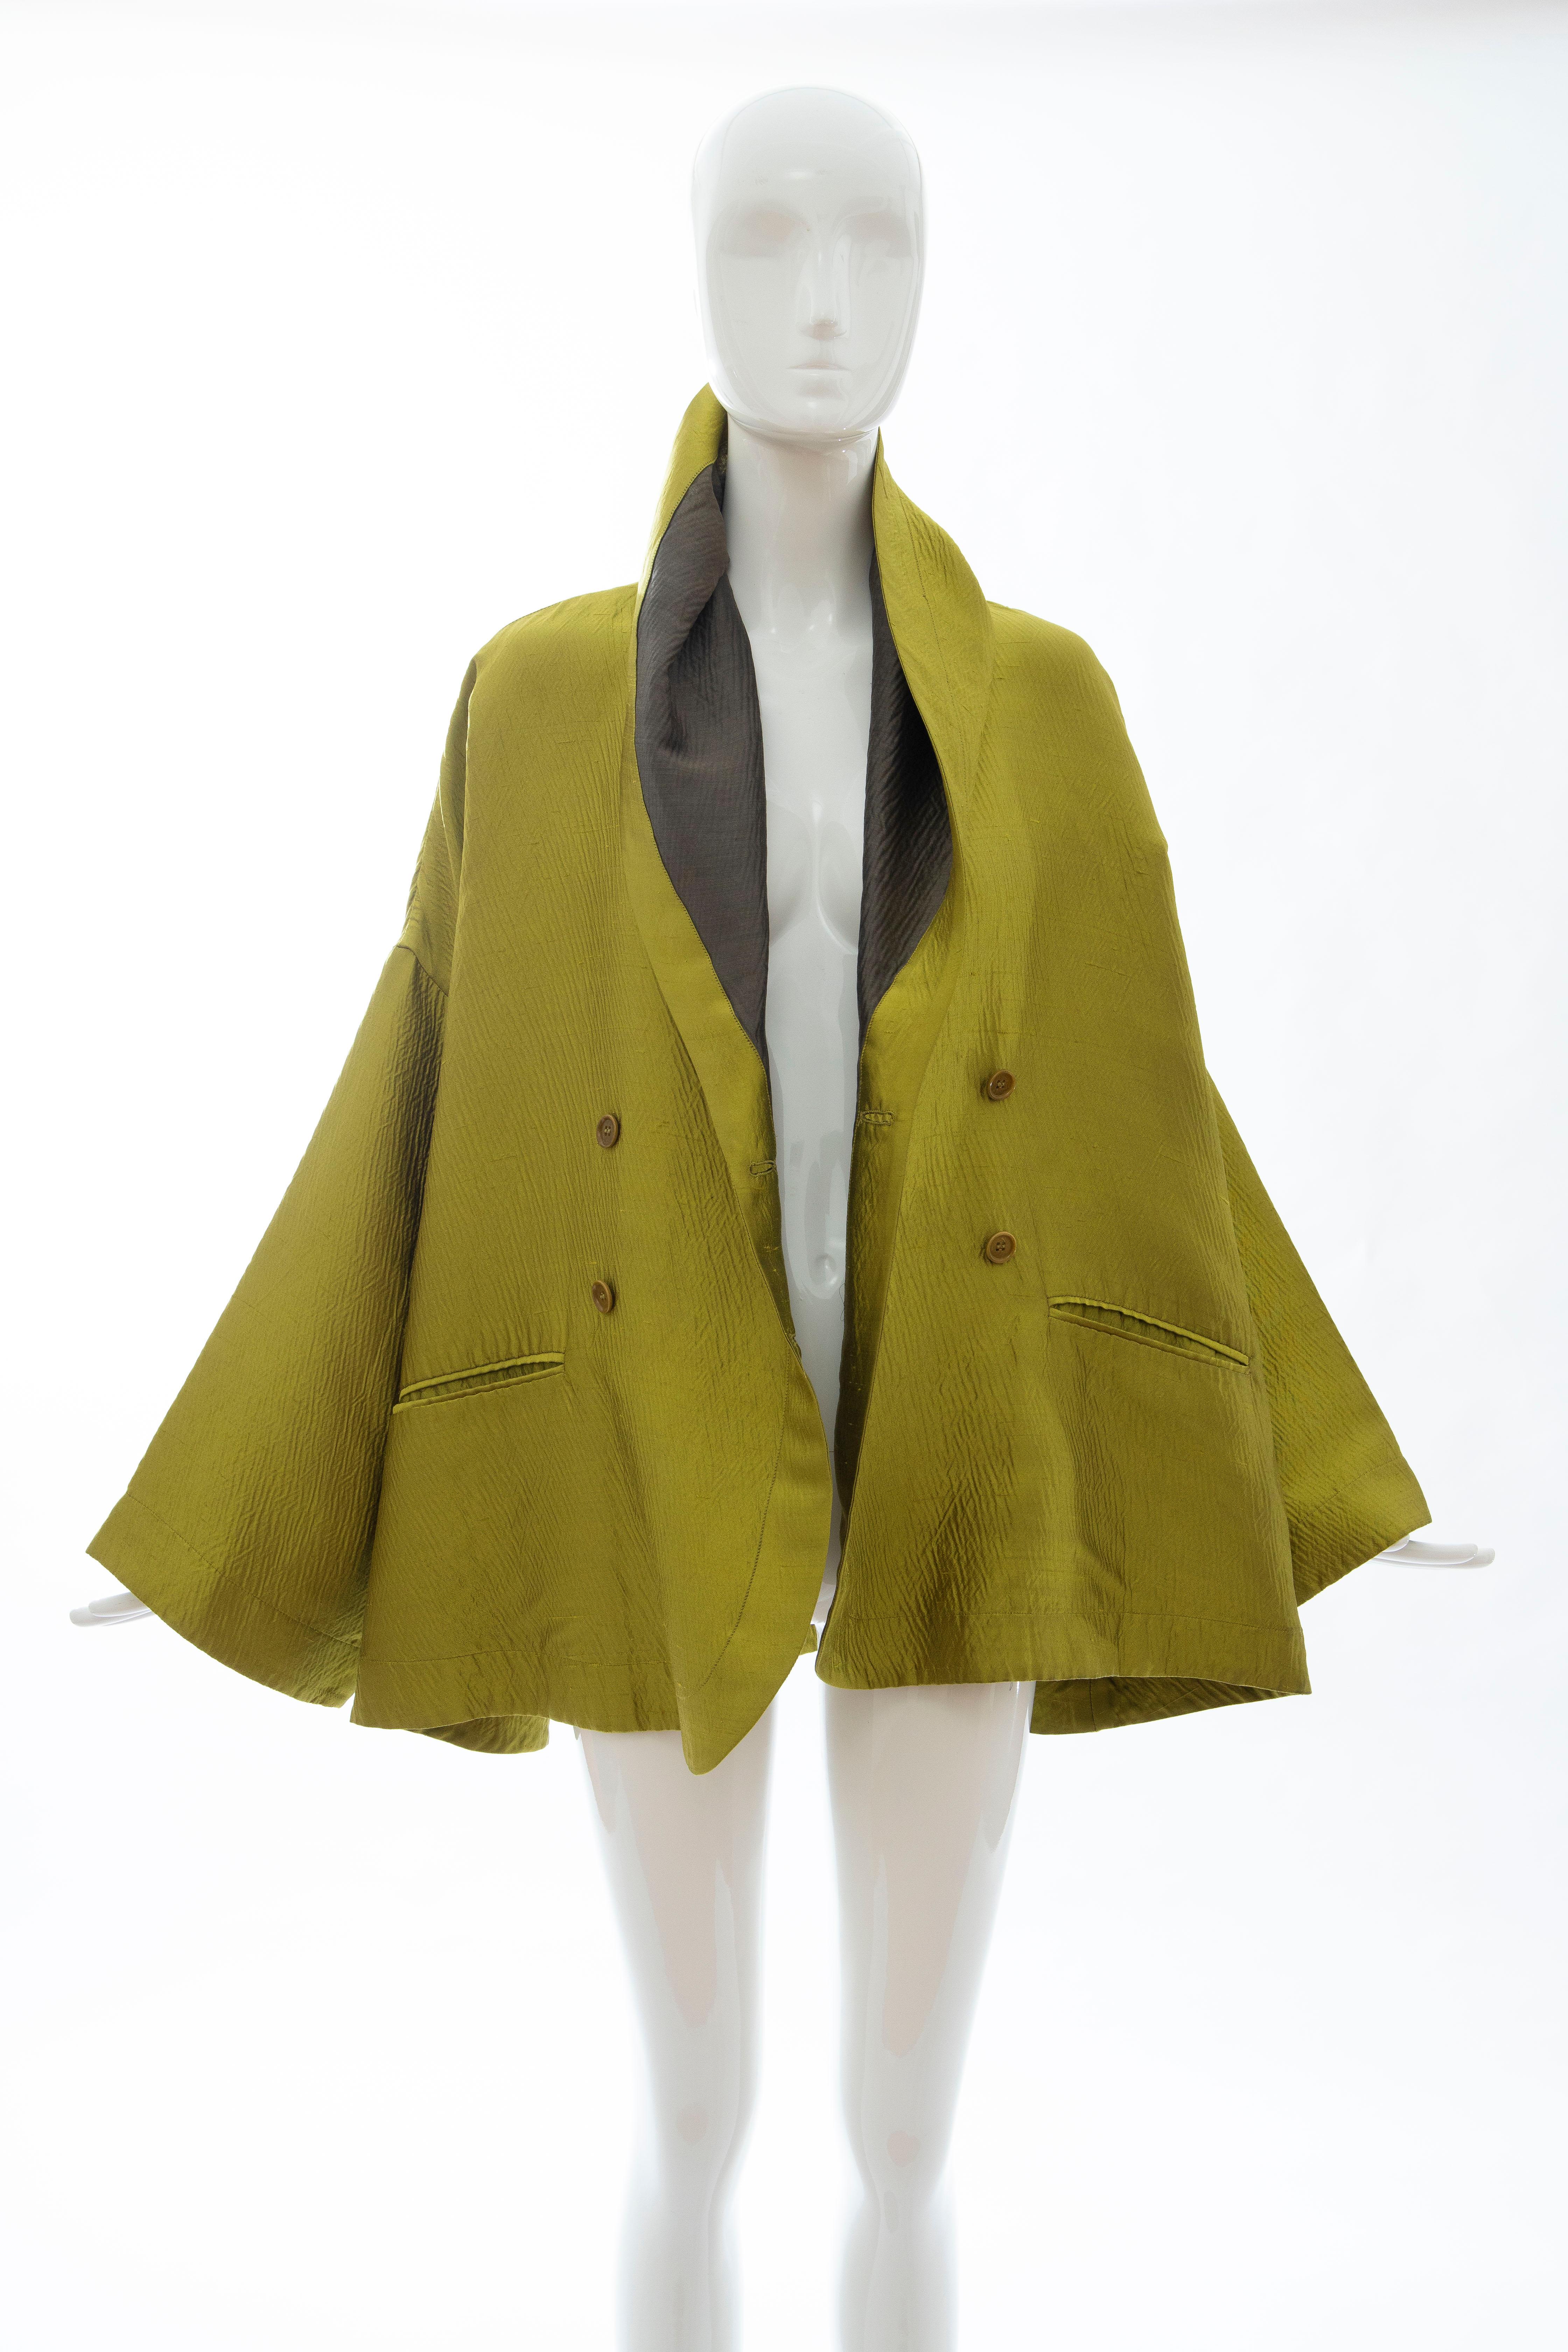 Romeo Gigli Runway Silk Cotton Chartreuse Green Evening Jacket, Fall 1991 11